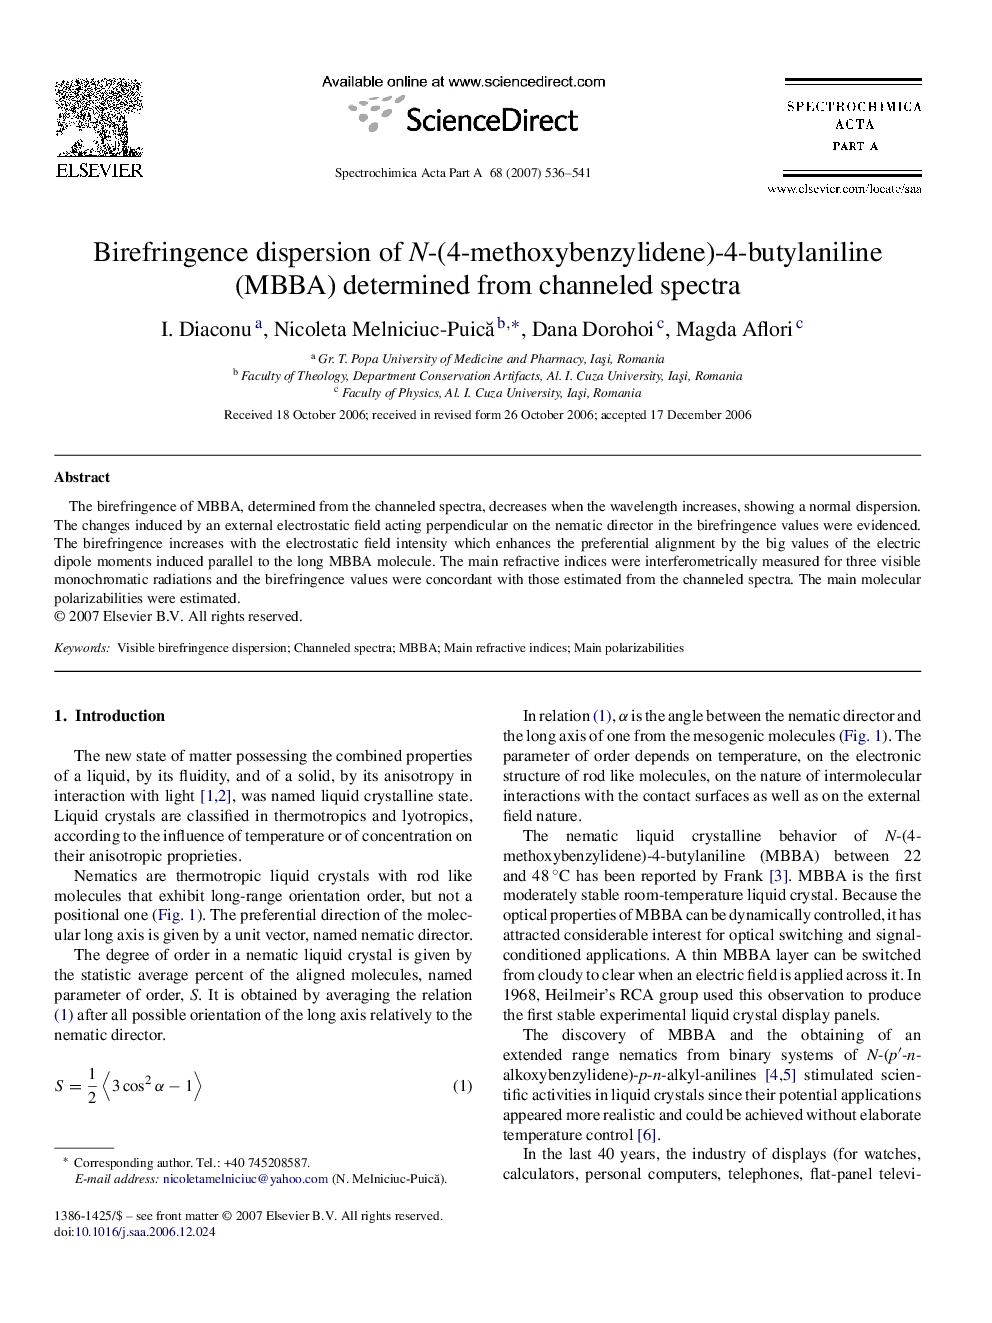 Birefringence dispersion of N-(4-methoxybenzylidene)-4-butylaniline (MBBA) determined from channeled spectra